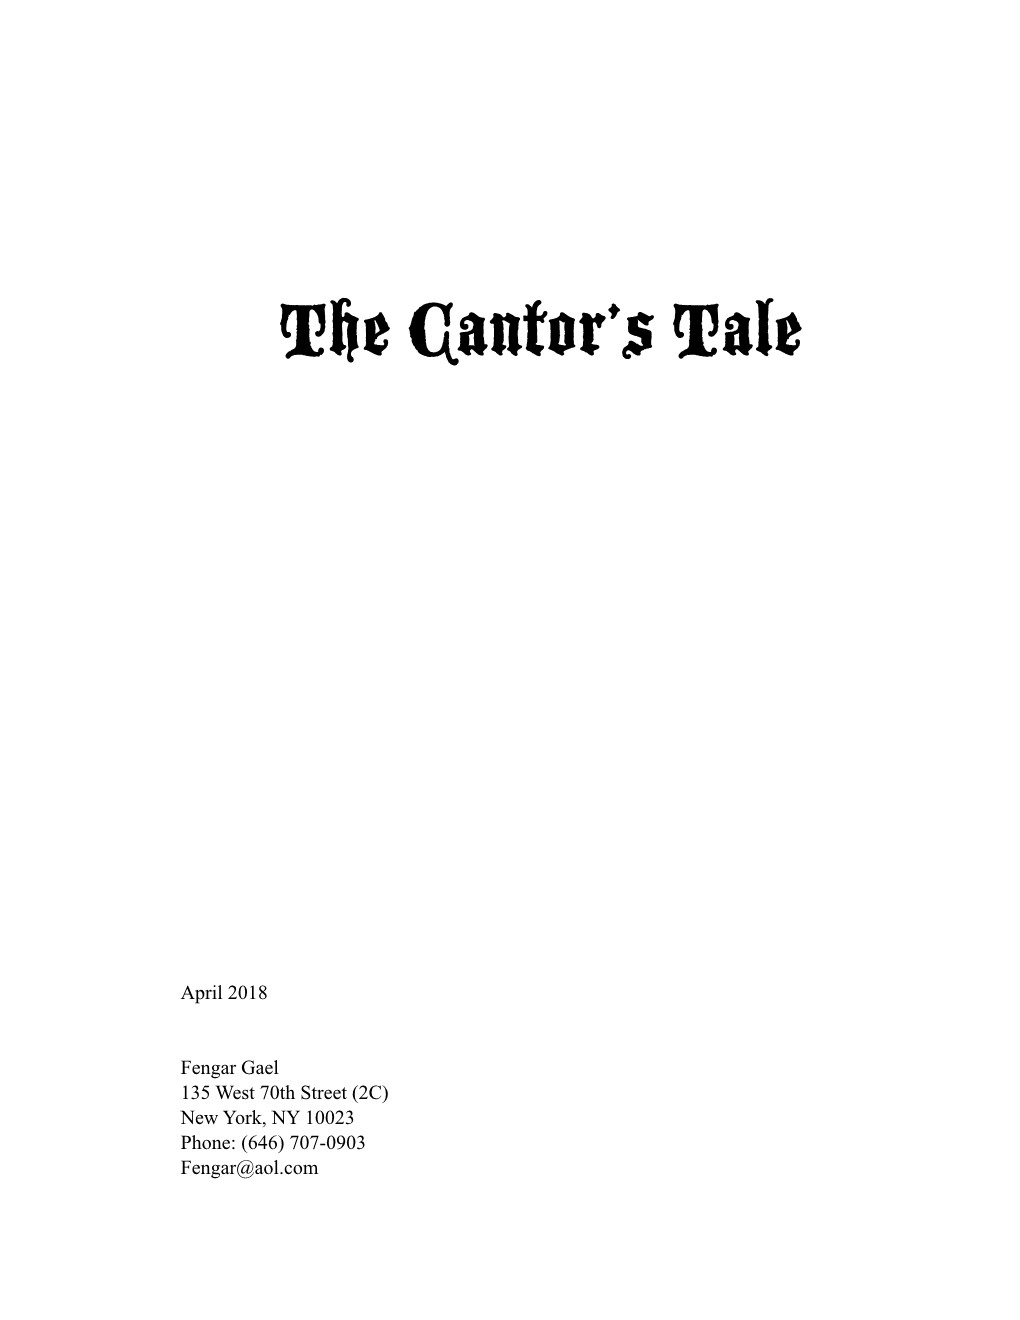 THE CANTOR's TALE Script 2018 April